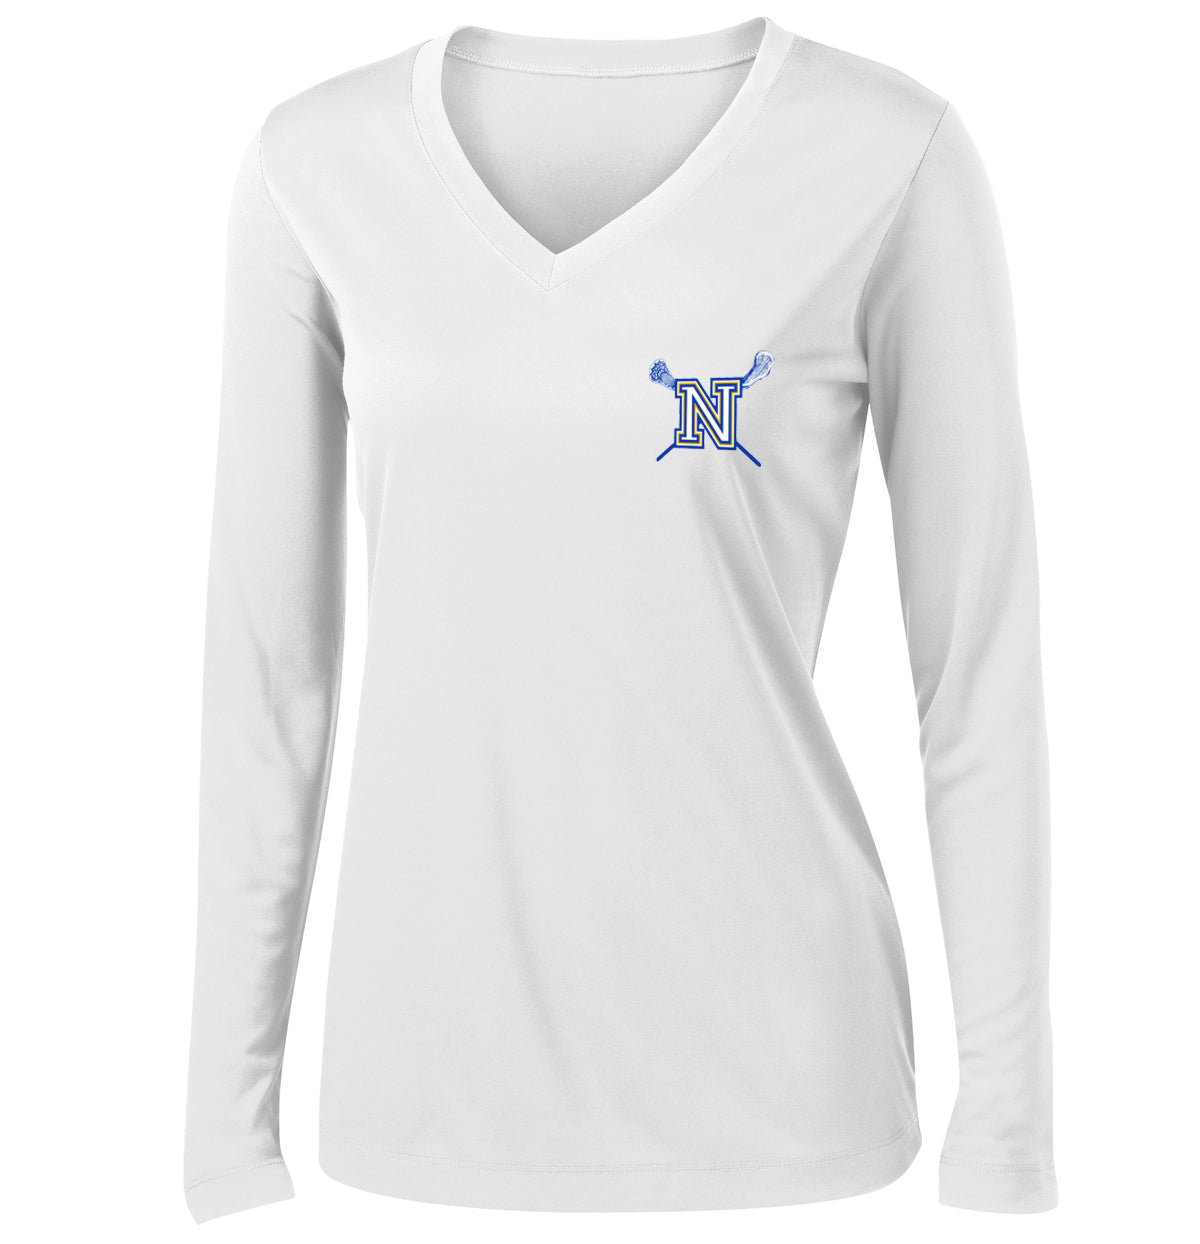 Newington Lacrosse Women's White Long Sleeve Performance Shirt